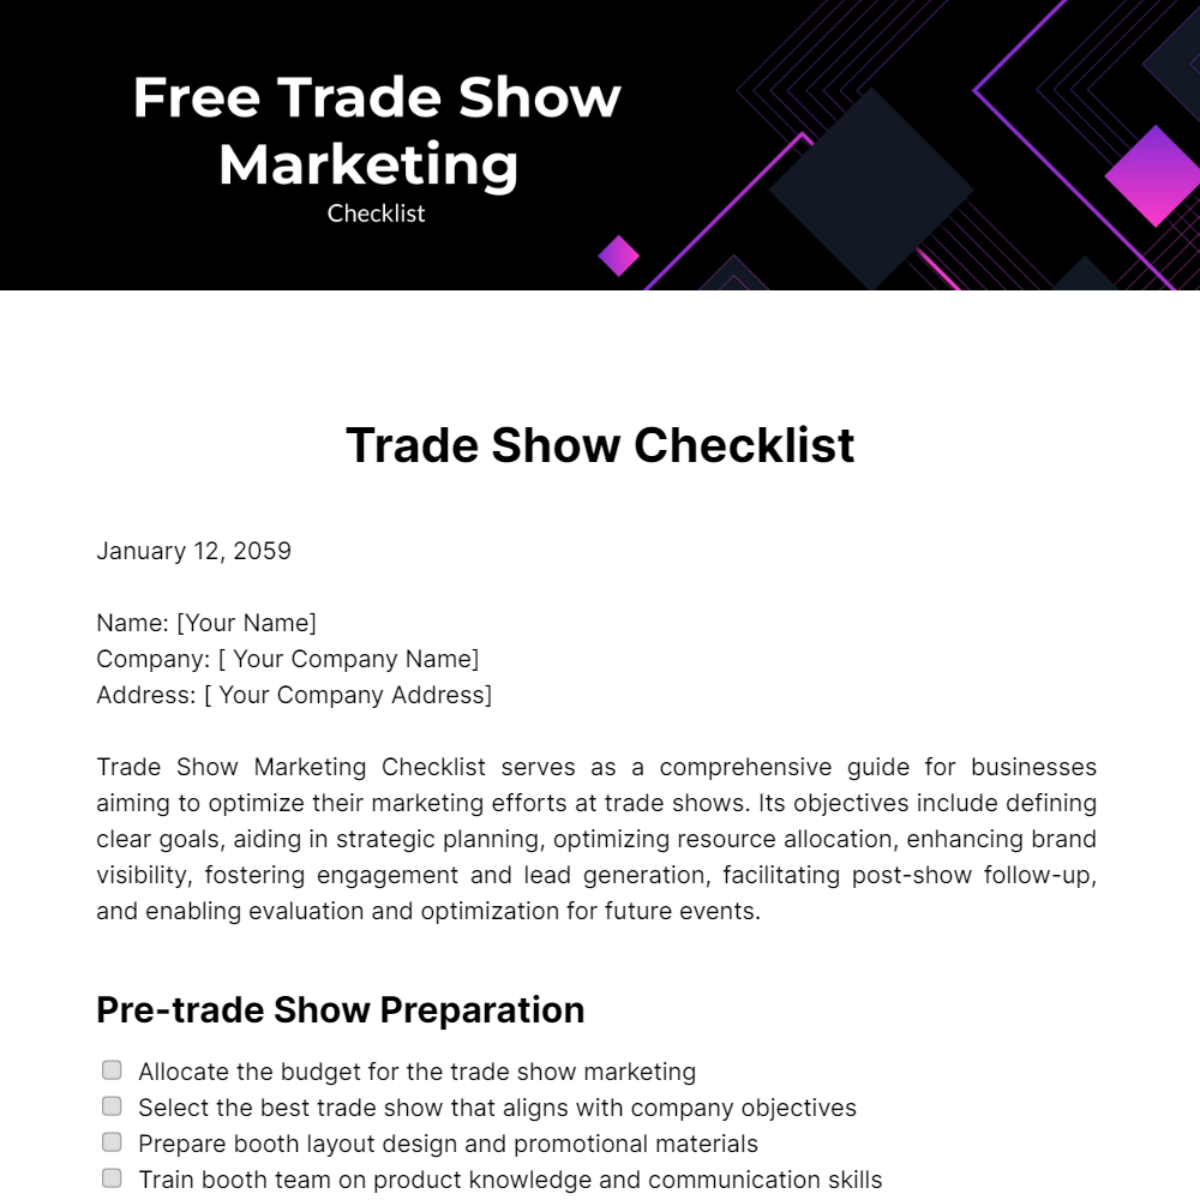 Free Trade Show Marketing Checklist Template